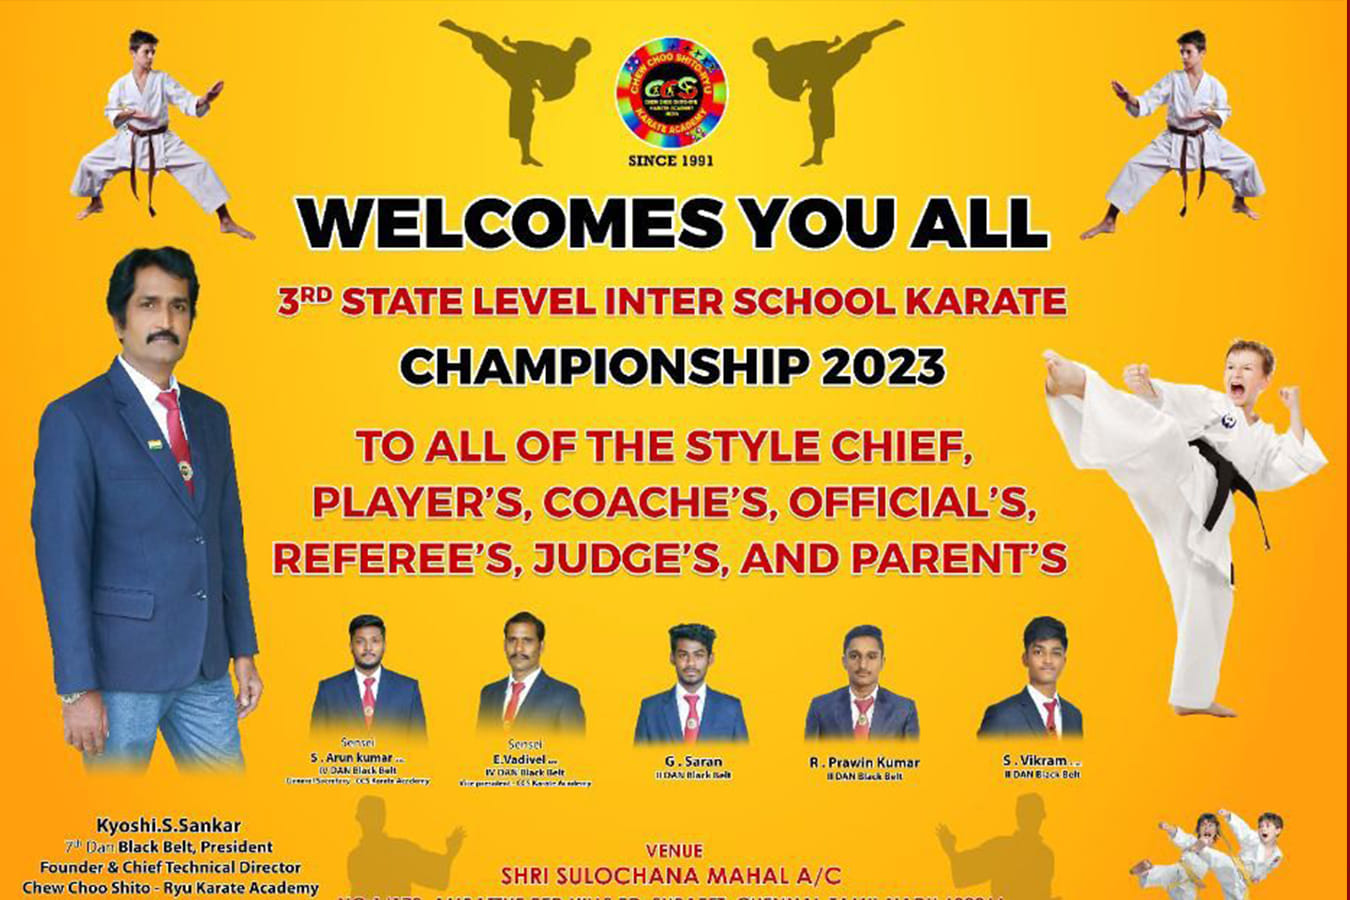 3rd State Level Inter School Karate Championship 2023